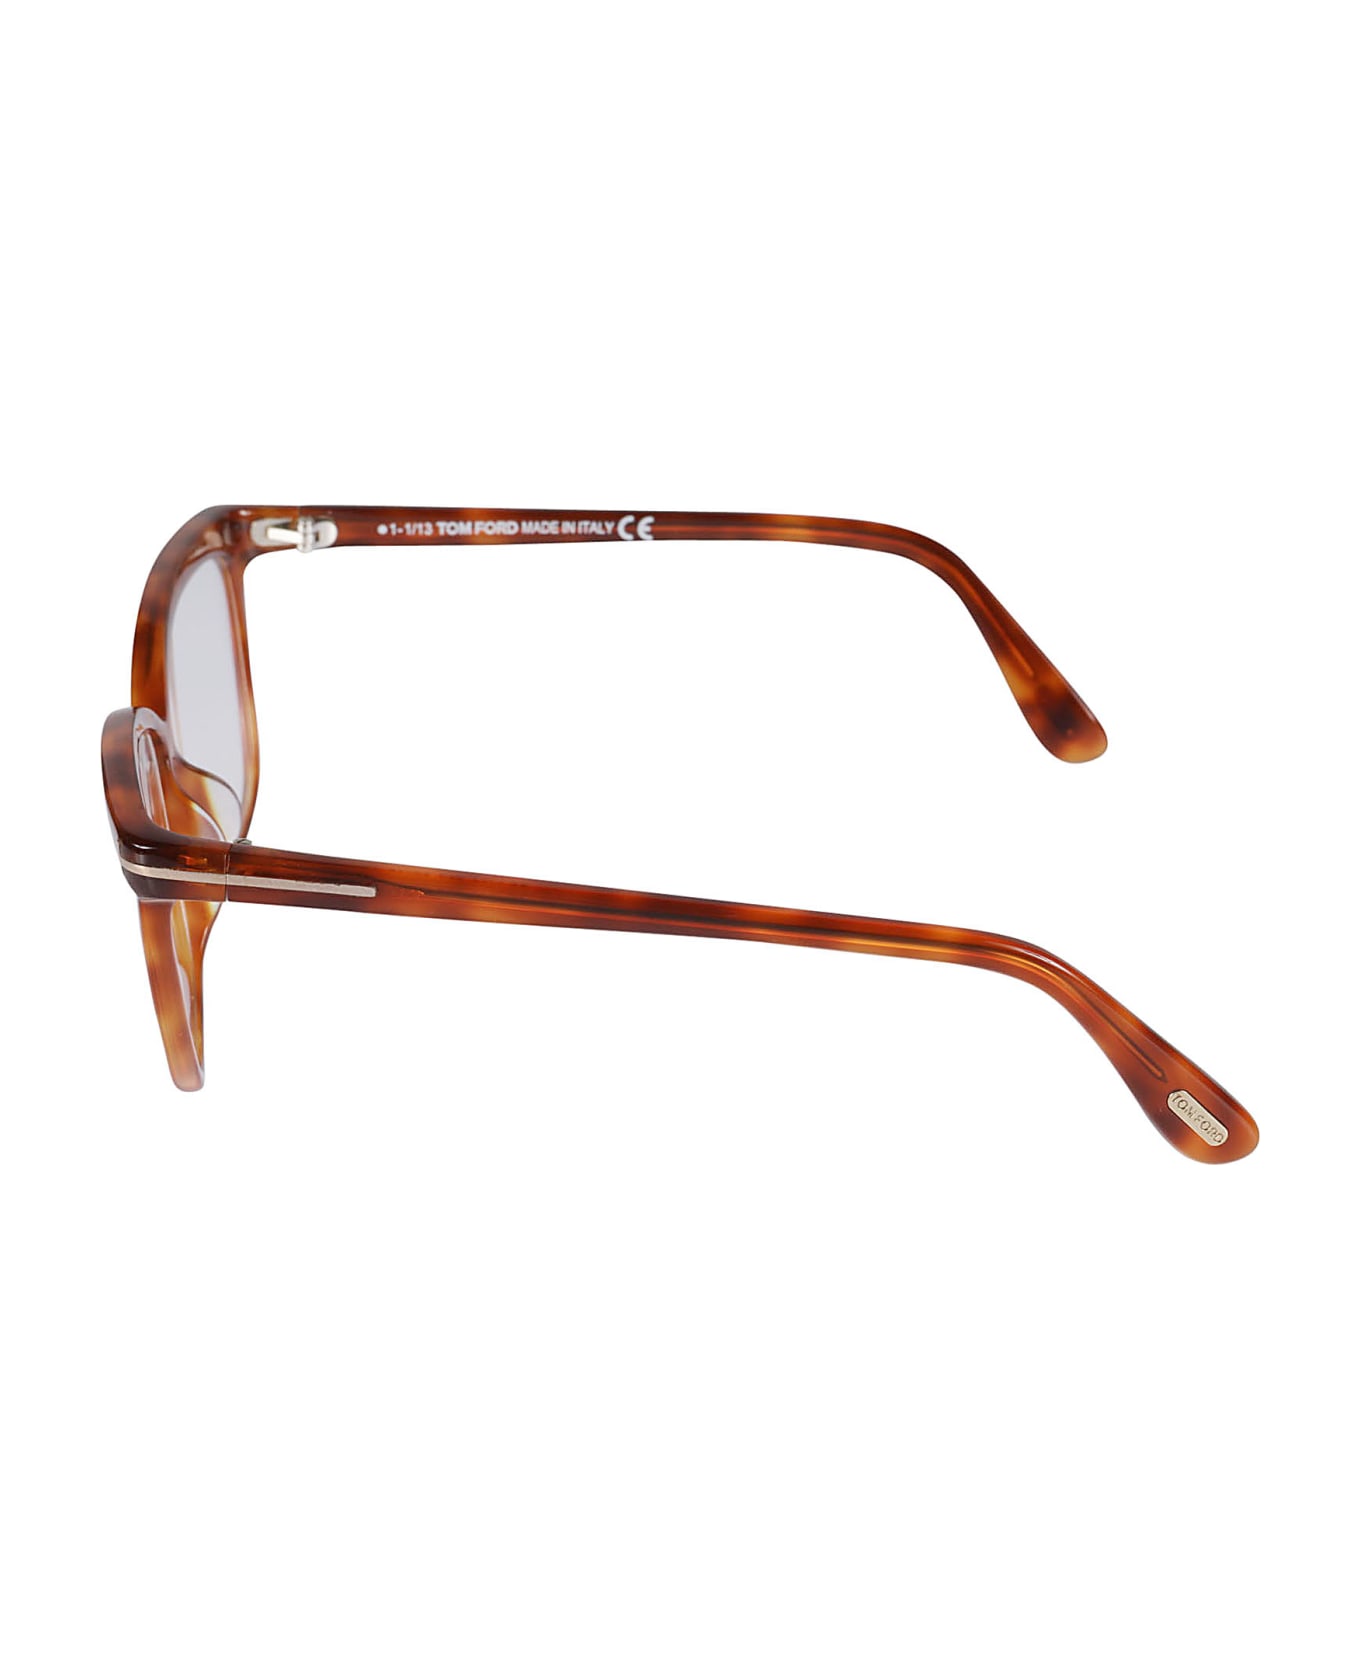 Tom Ford Eyewear Cross-bridge Clear Lens Glasses - 053 アイウェア